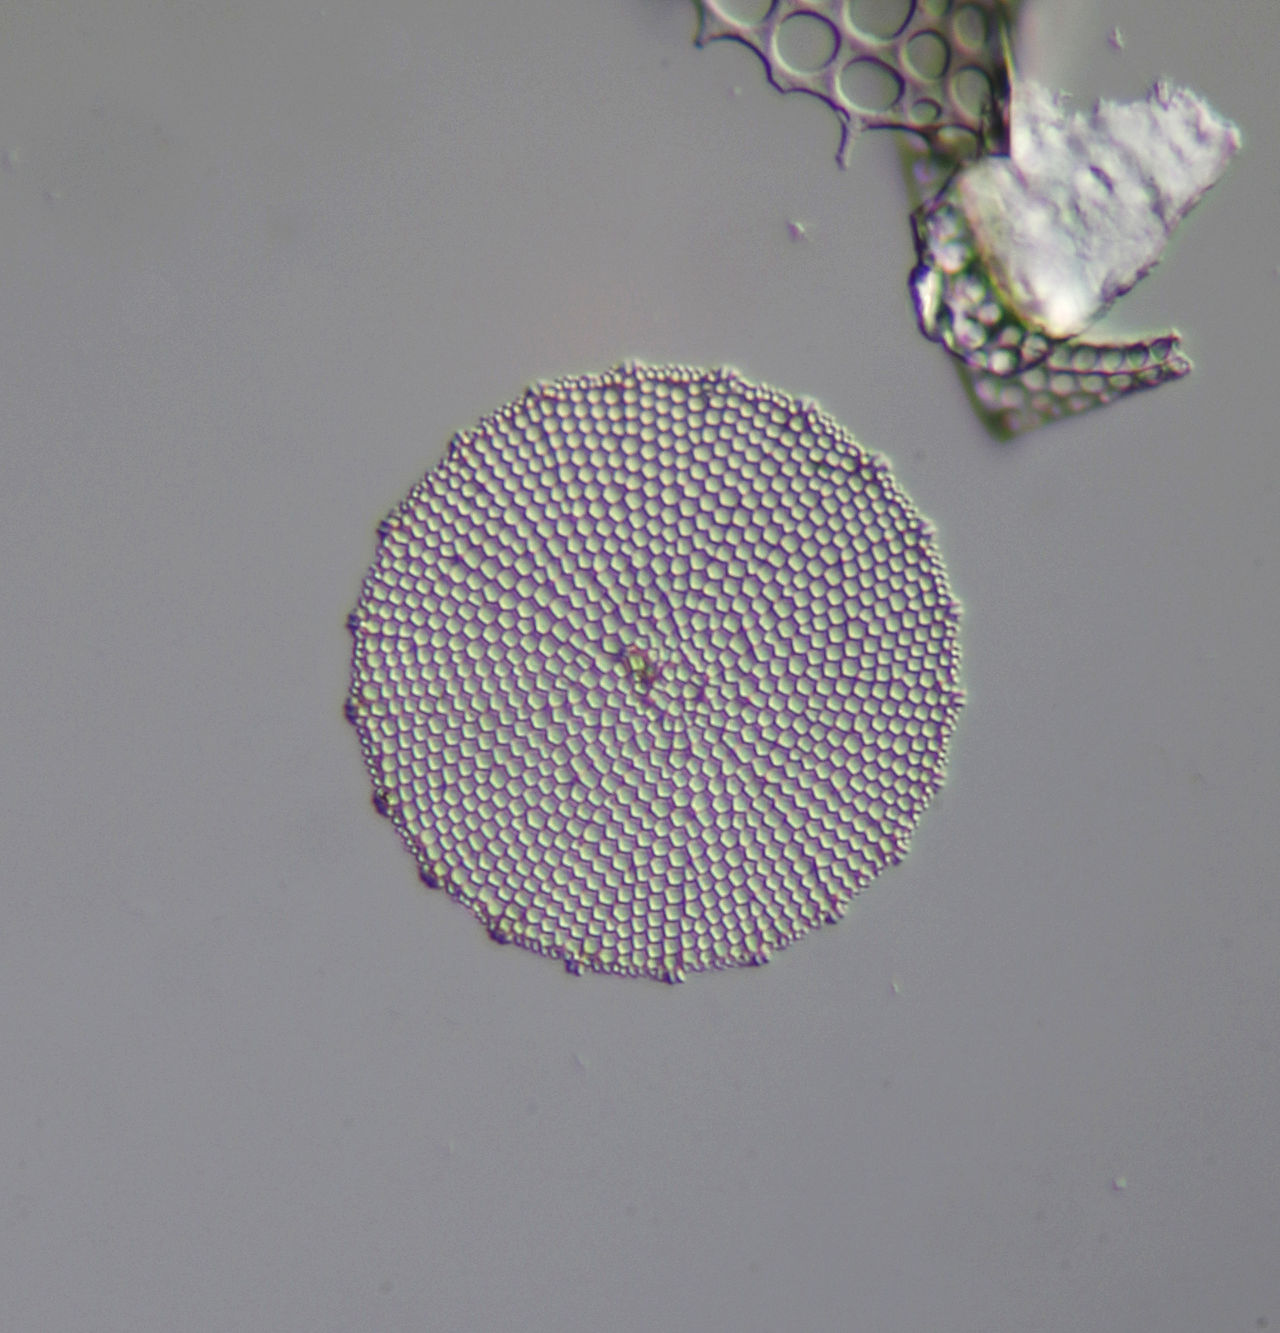 diatom under a microscope